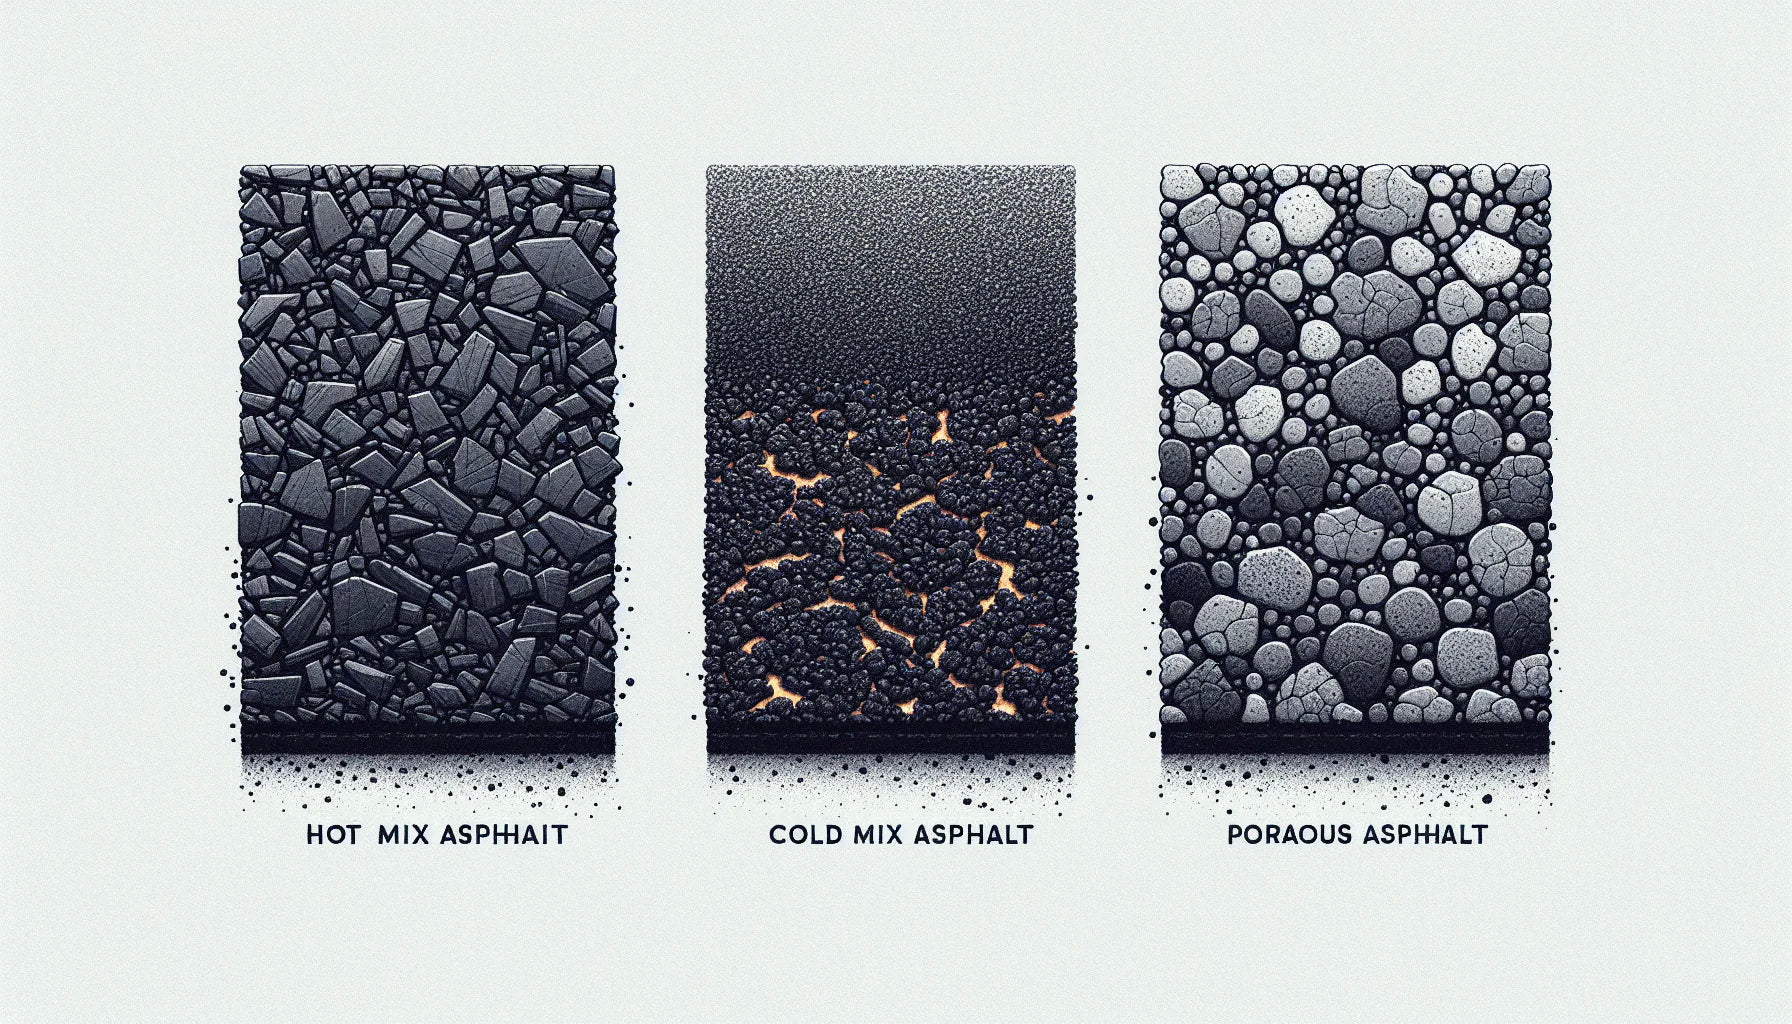 Different types of asphalt